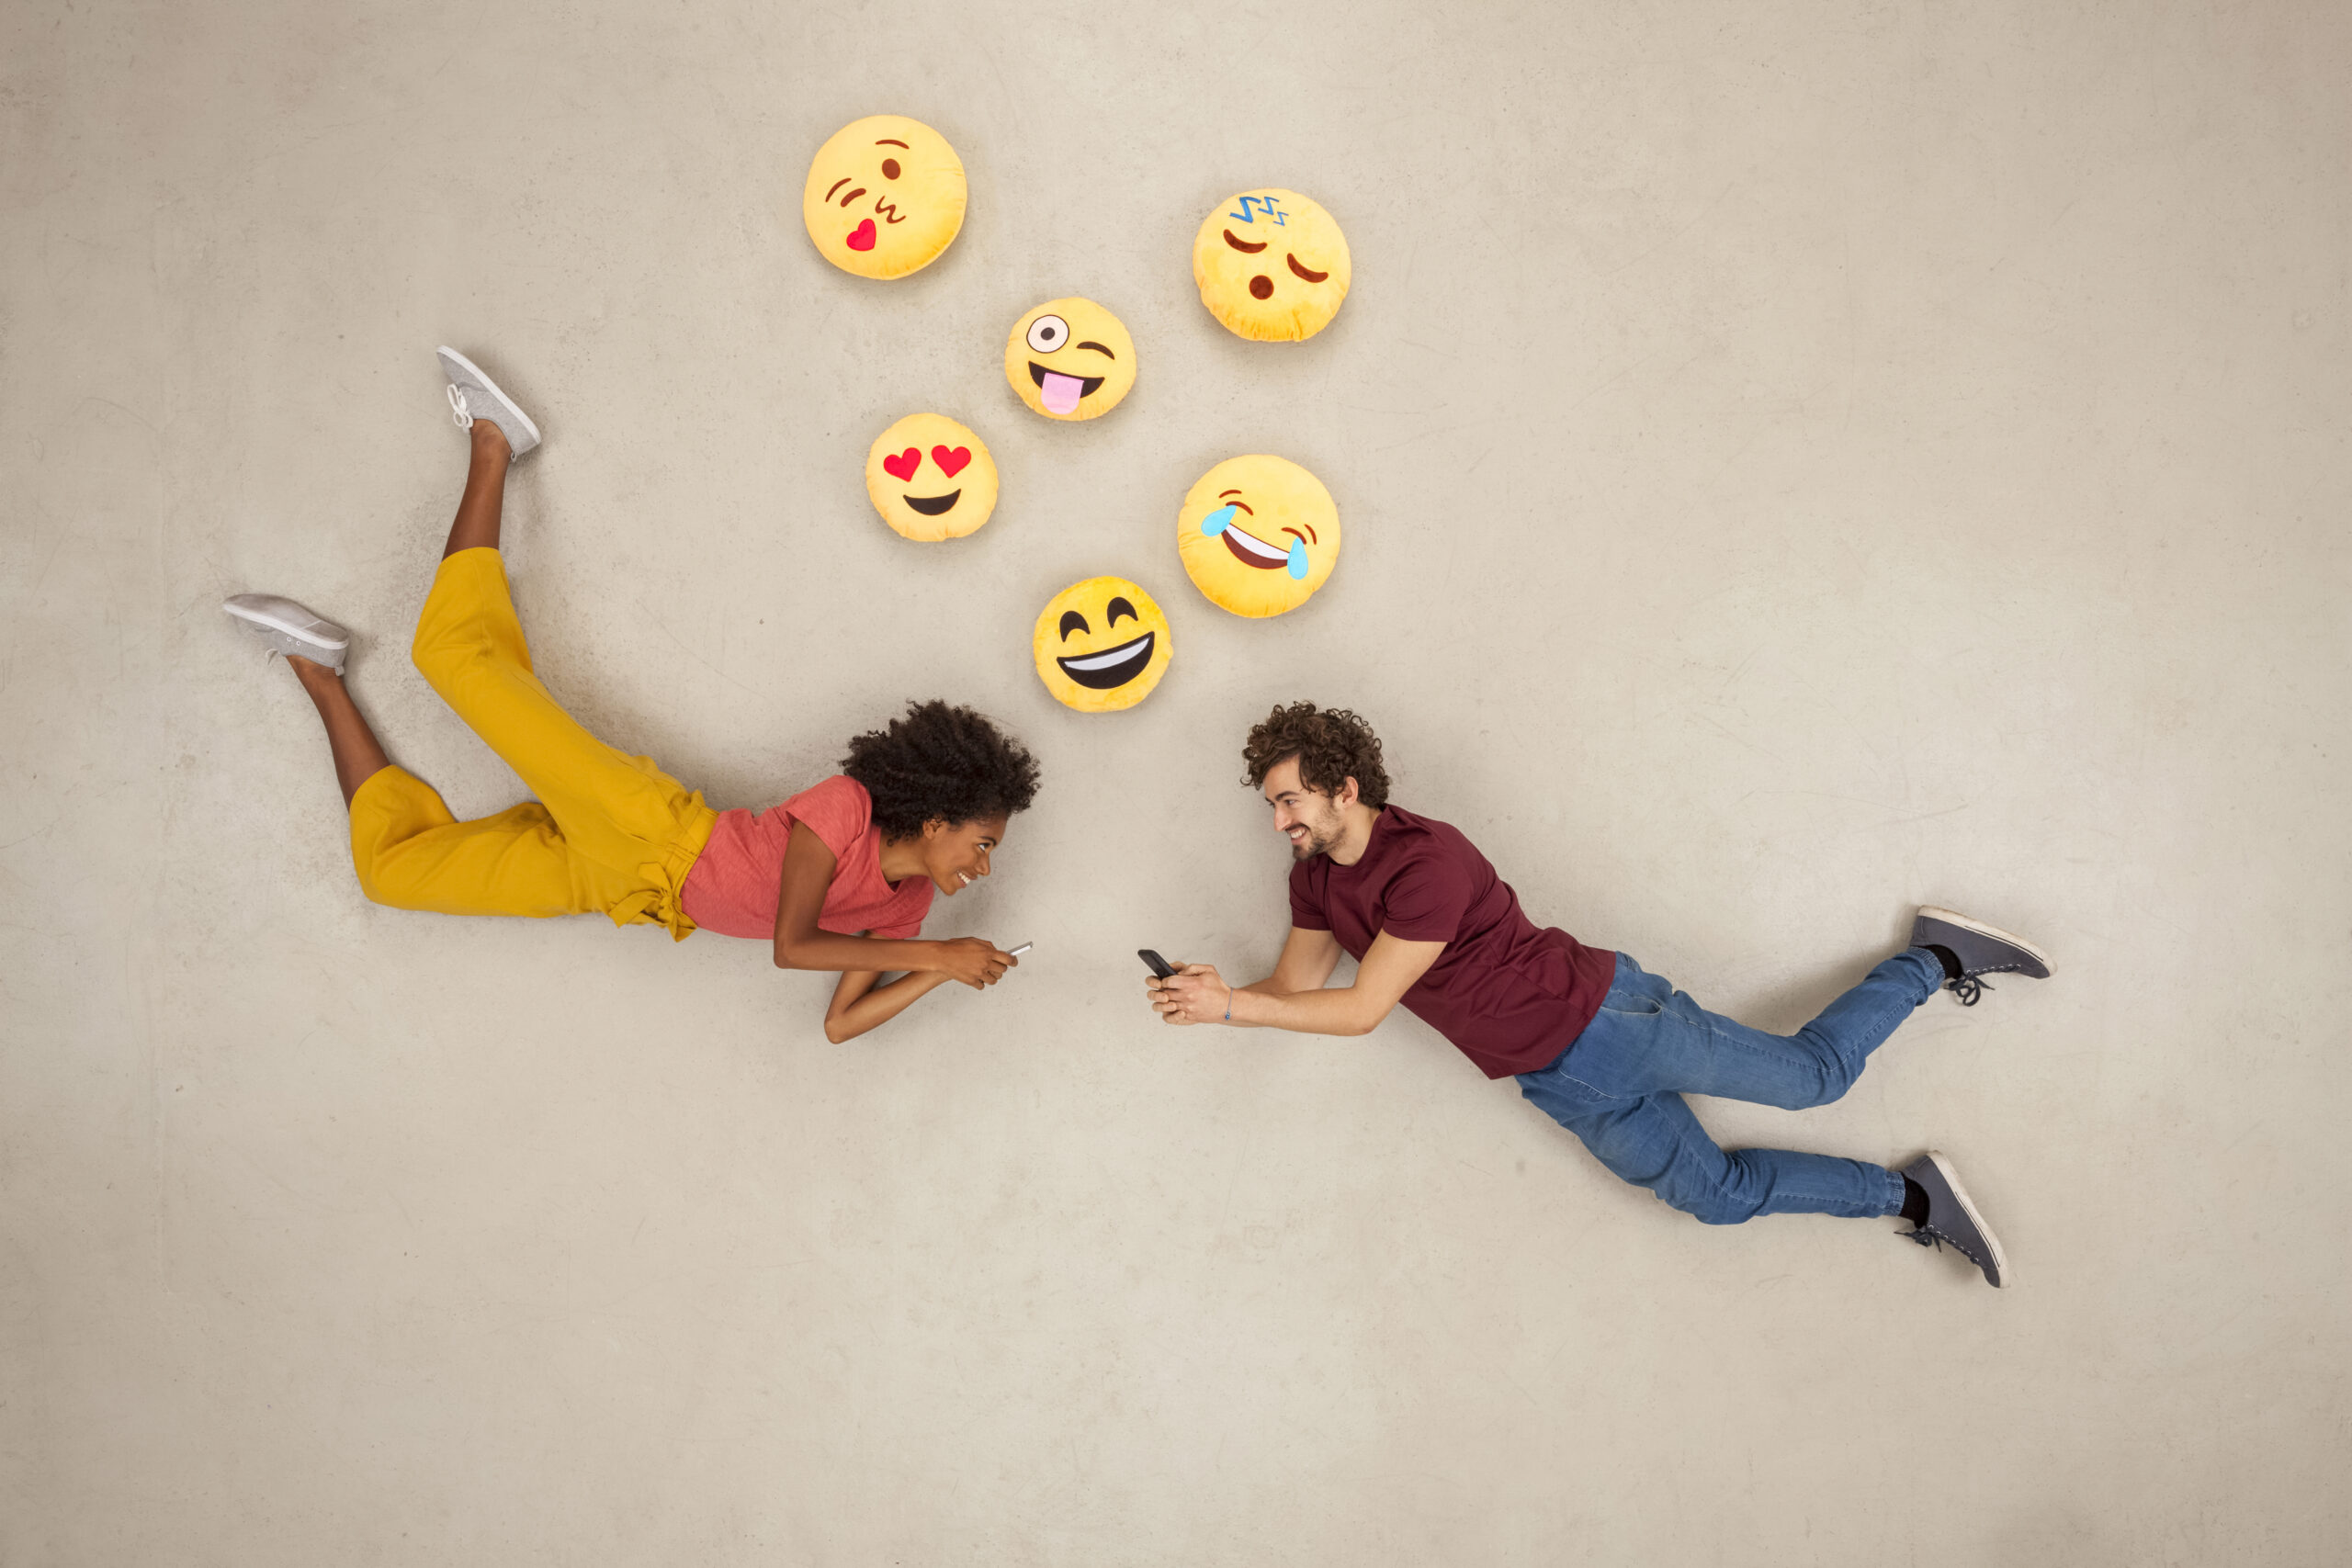 Similar texting habits make for a happier relationship